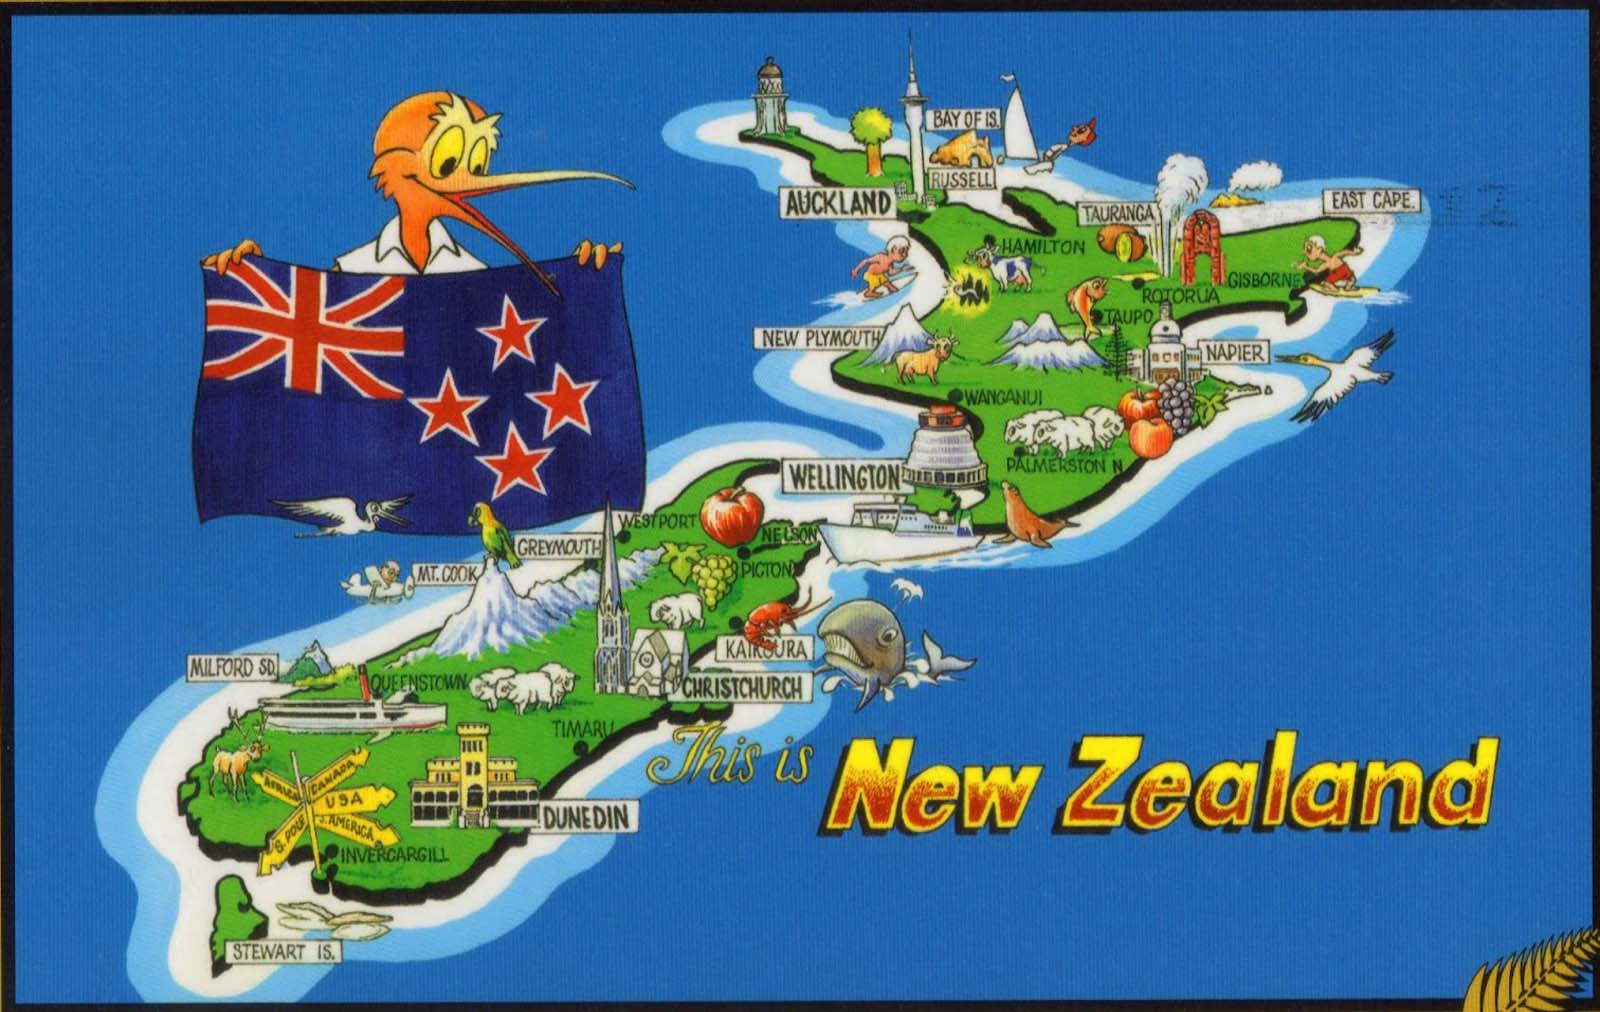 New Zealand towns